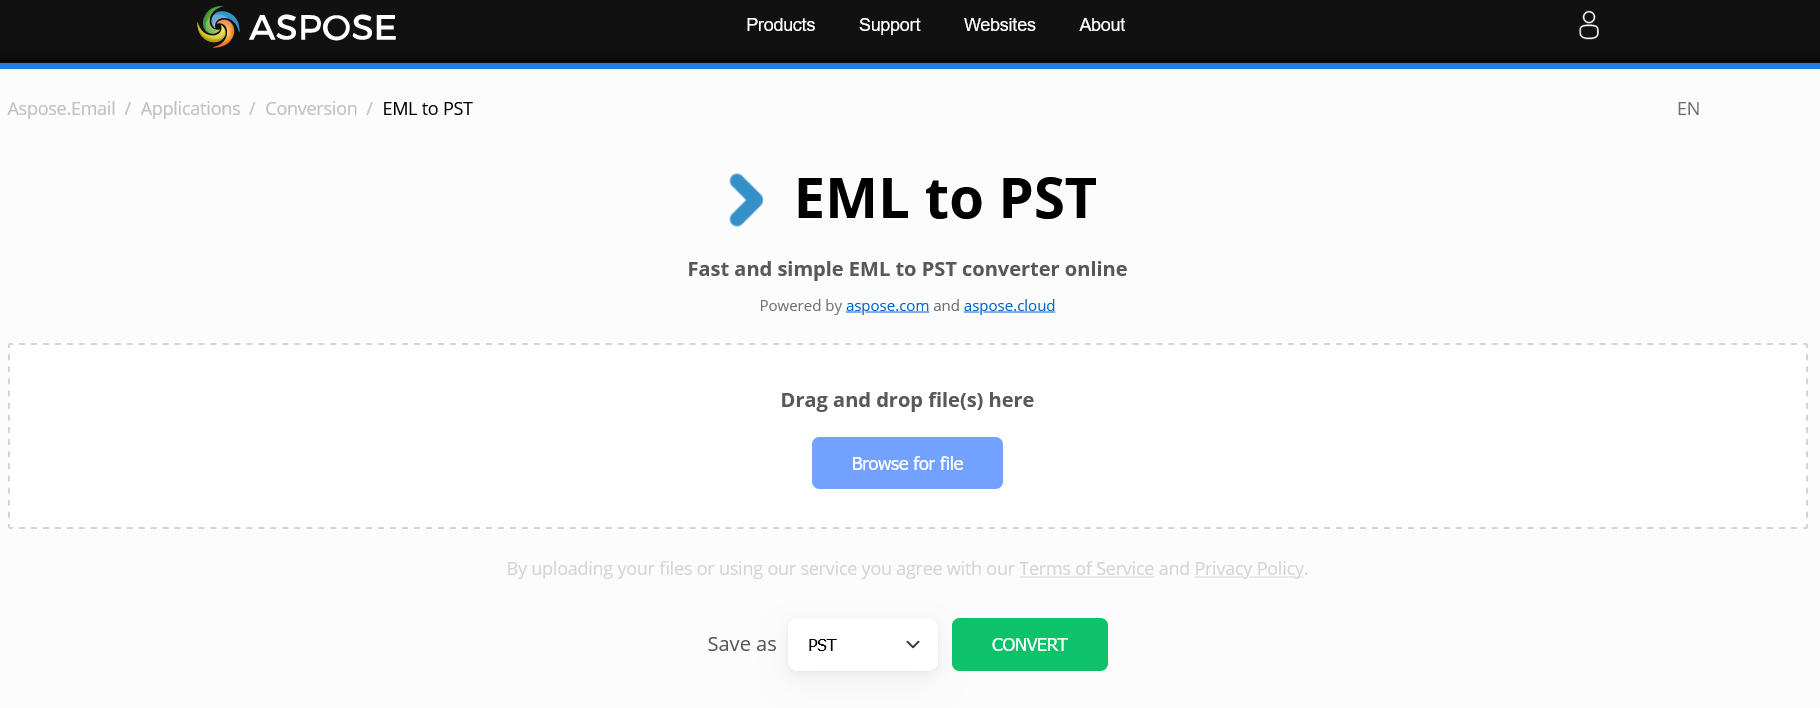 ASPOSE EML to PST Online Converter